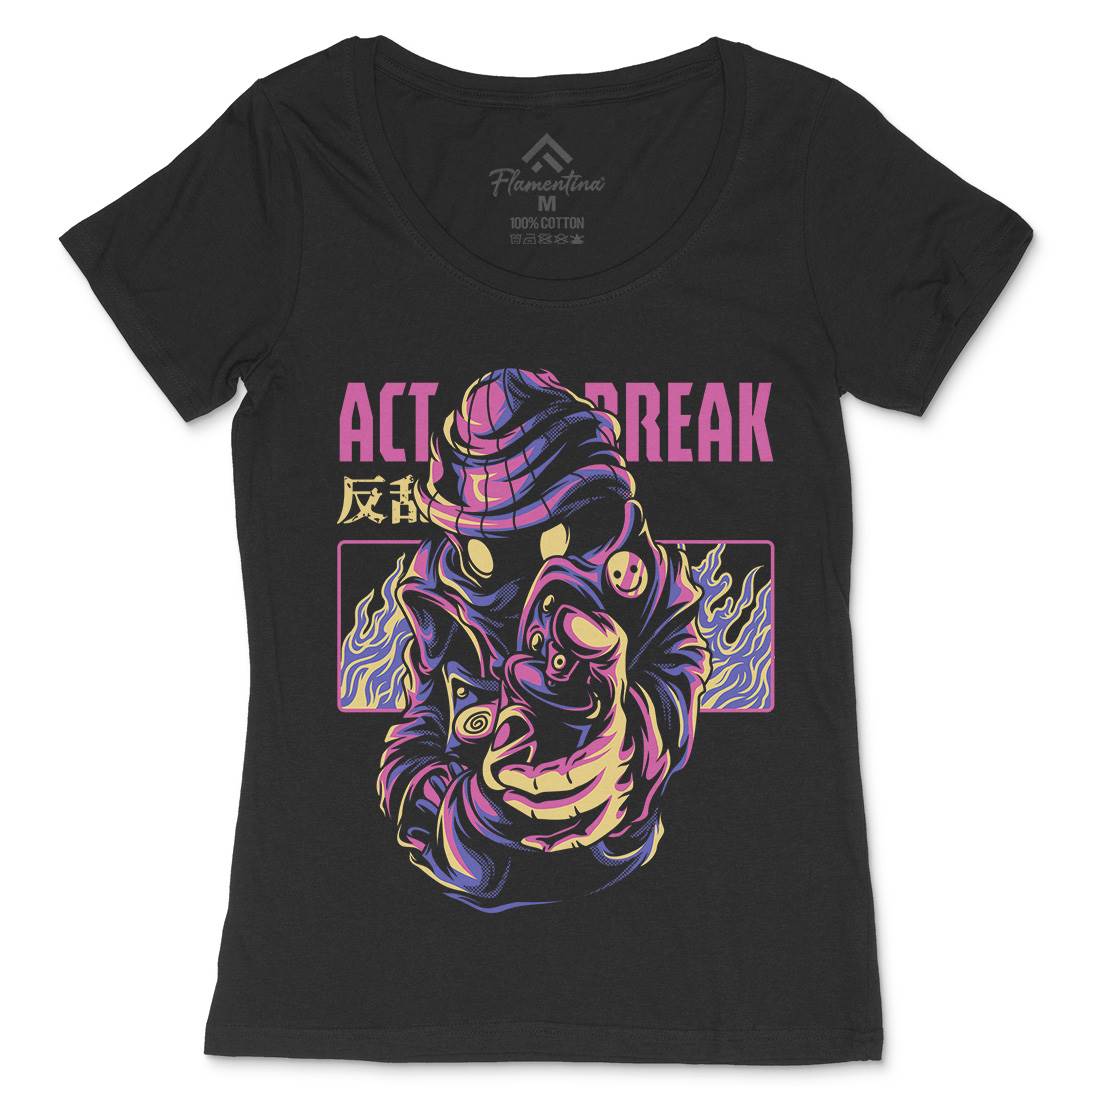 Act Break Womens Scoop Neck T-Shirt Graffiti D700